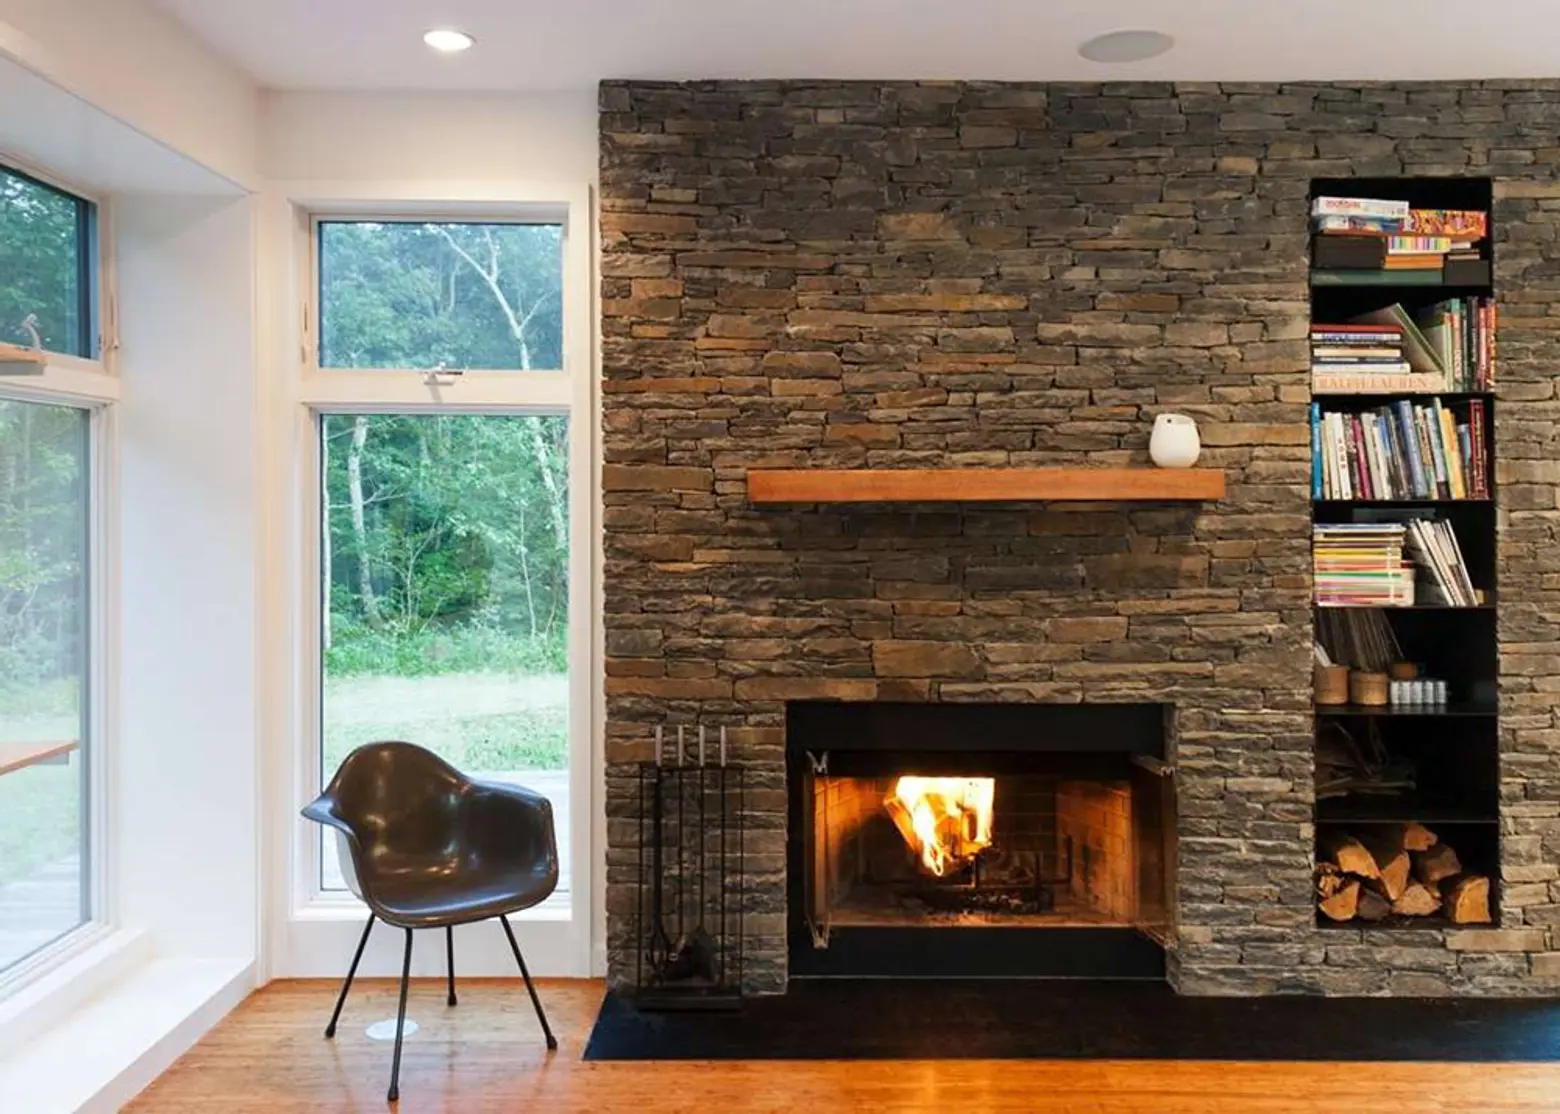 Resolution: 4 Architecture, wood and stone, prefab home, Catskills Suburban, Catskills, stone fireplace, modules, Re4a